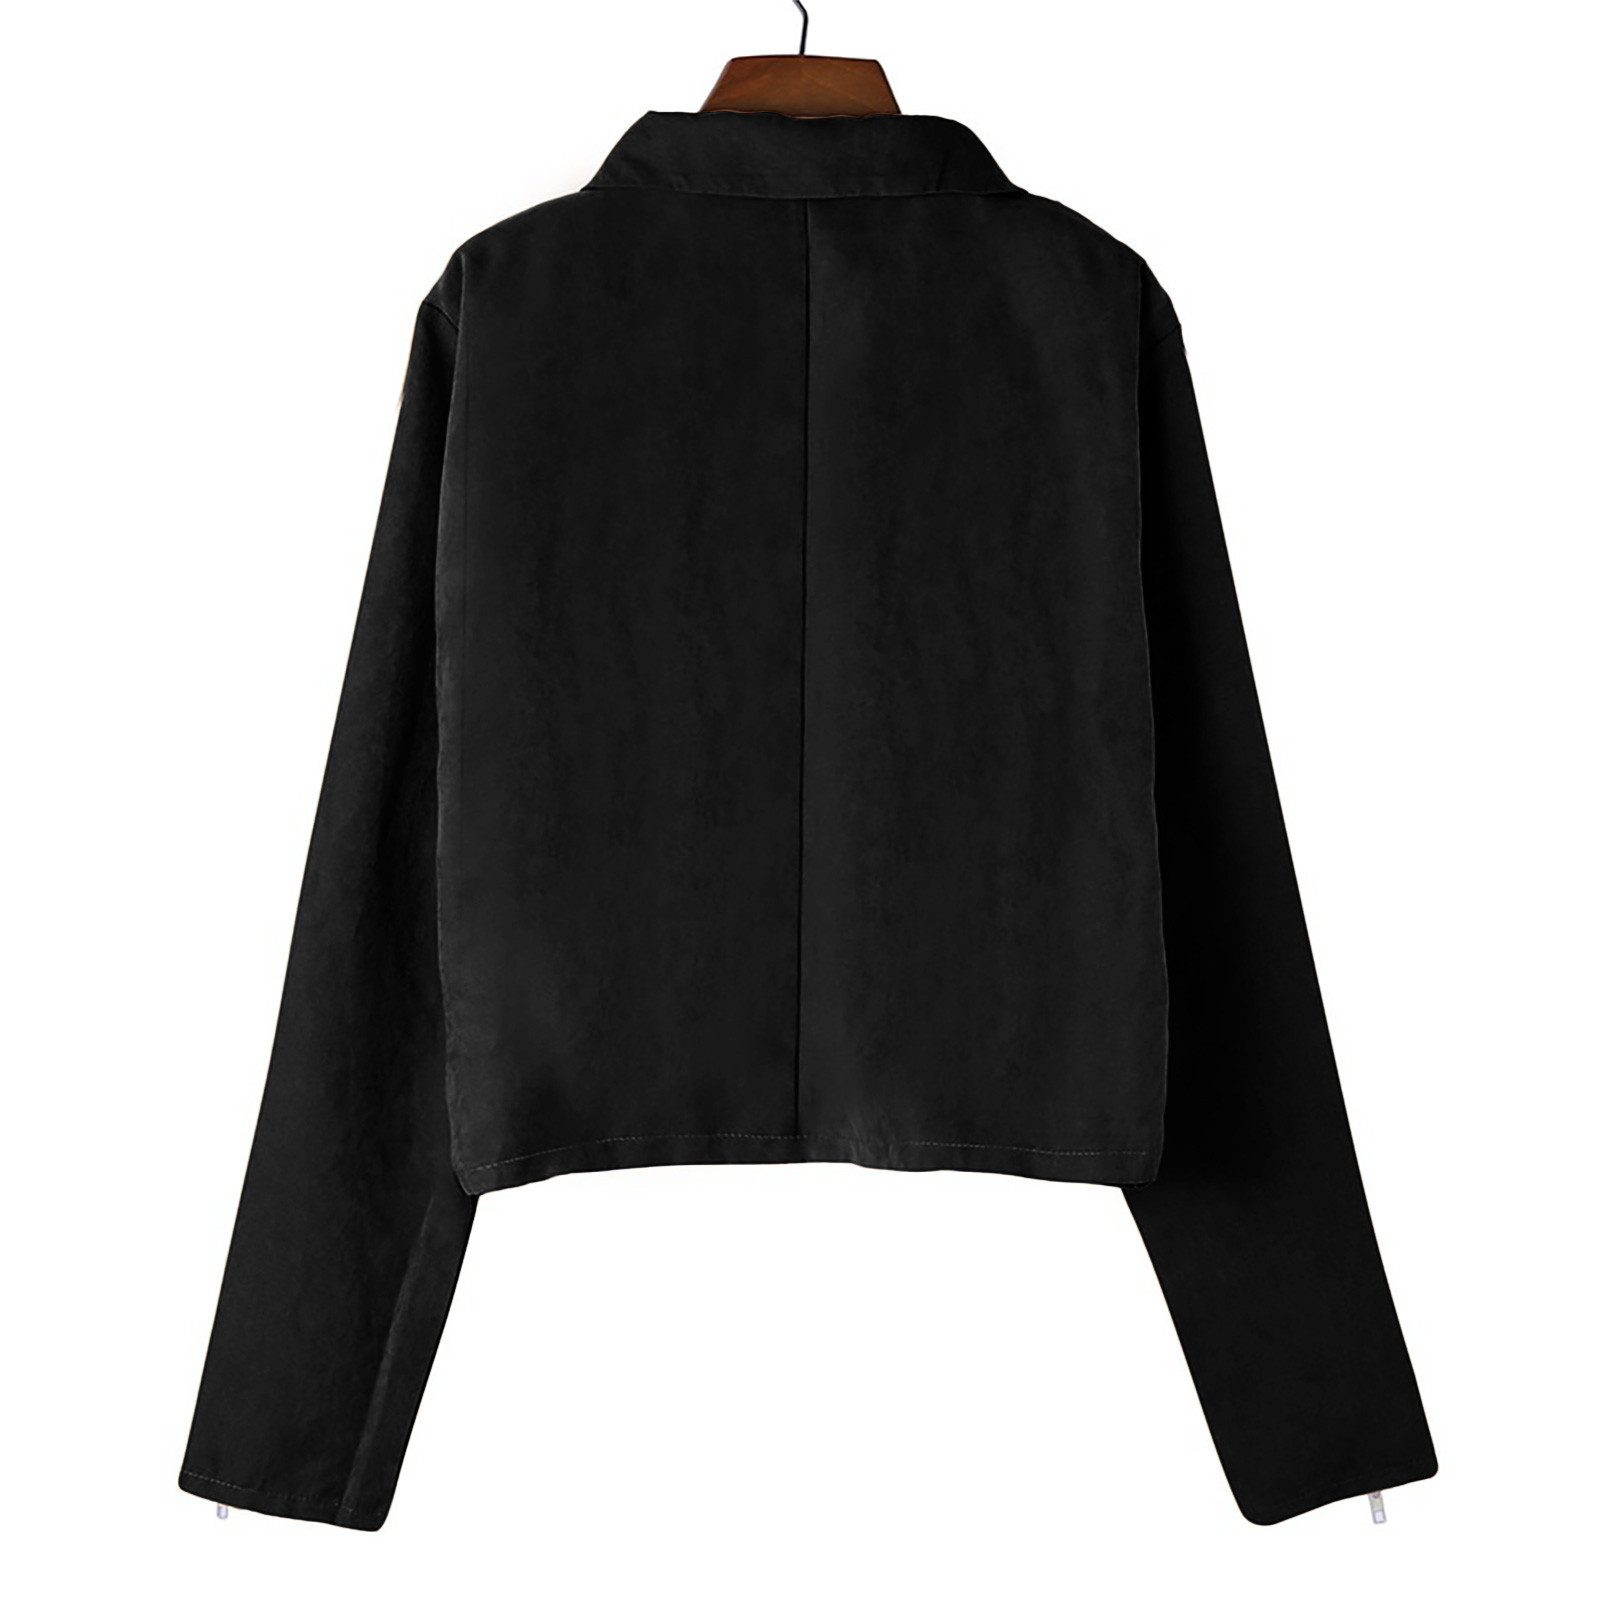 Leather Jacket for Women Fashion Leather Motorcycle Jacket Plus Size Faux Leather Tops Lightweight Short Jacket Coat - image 5 of 8